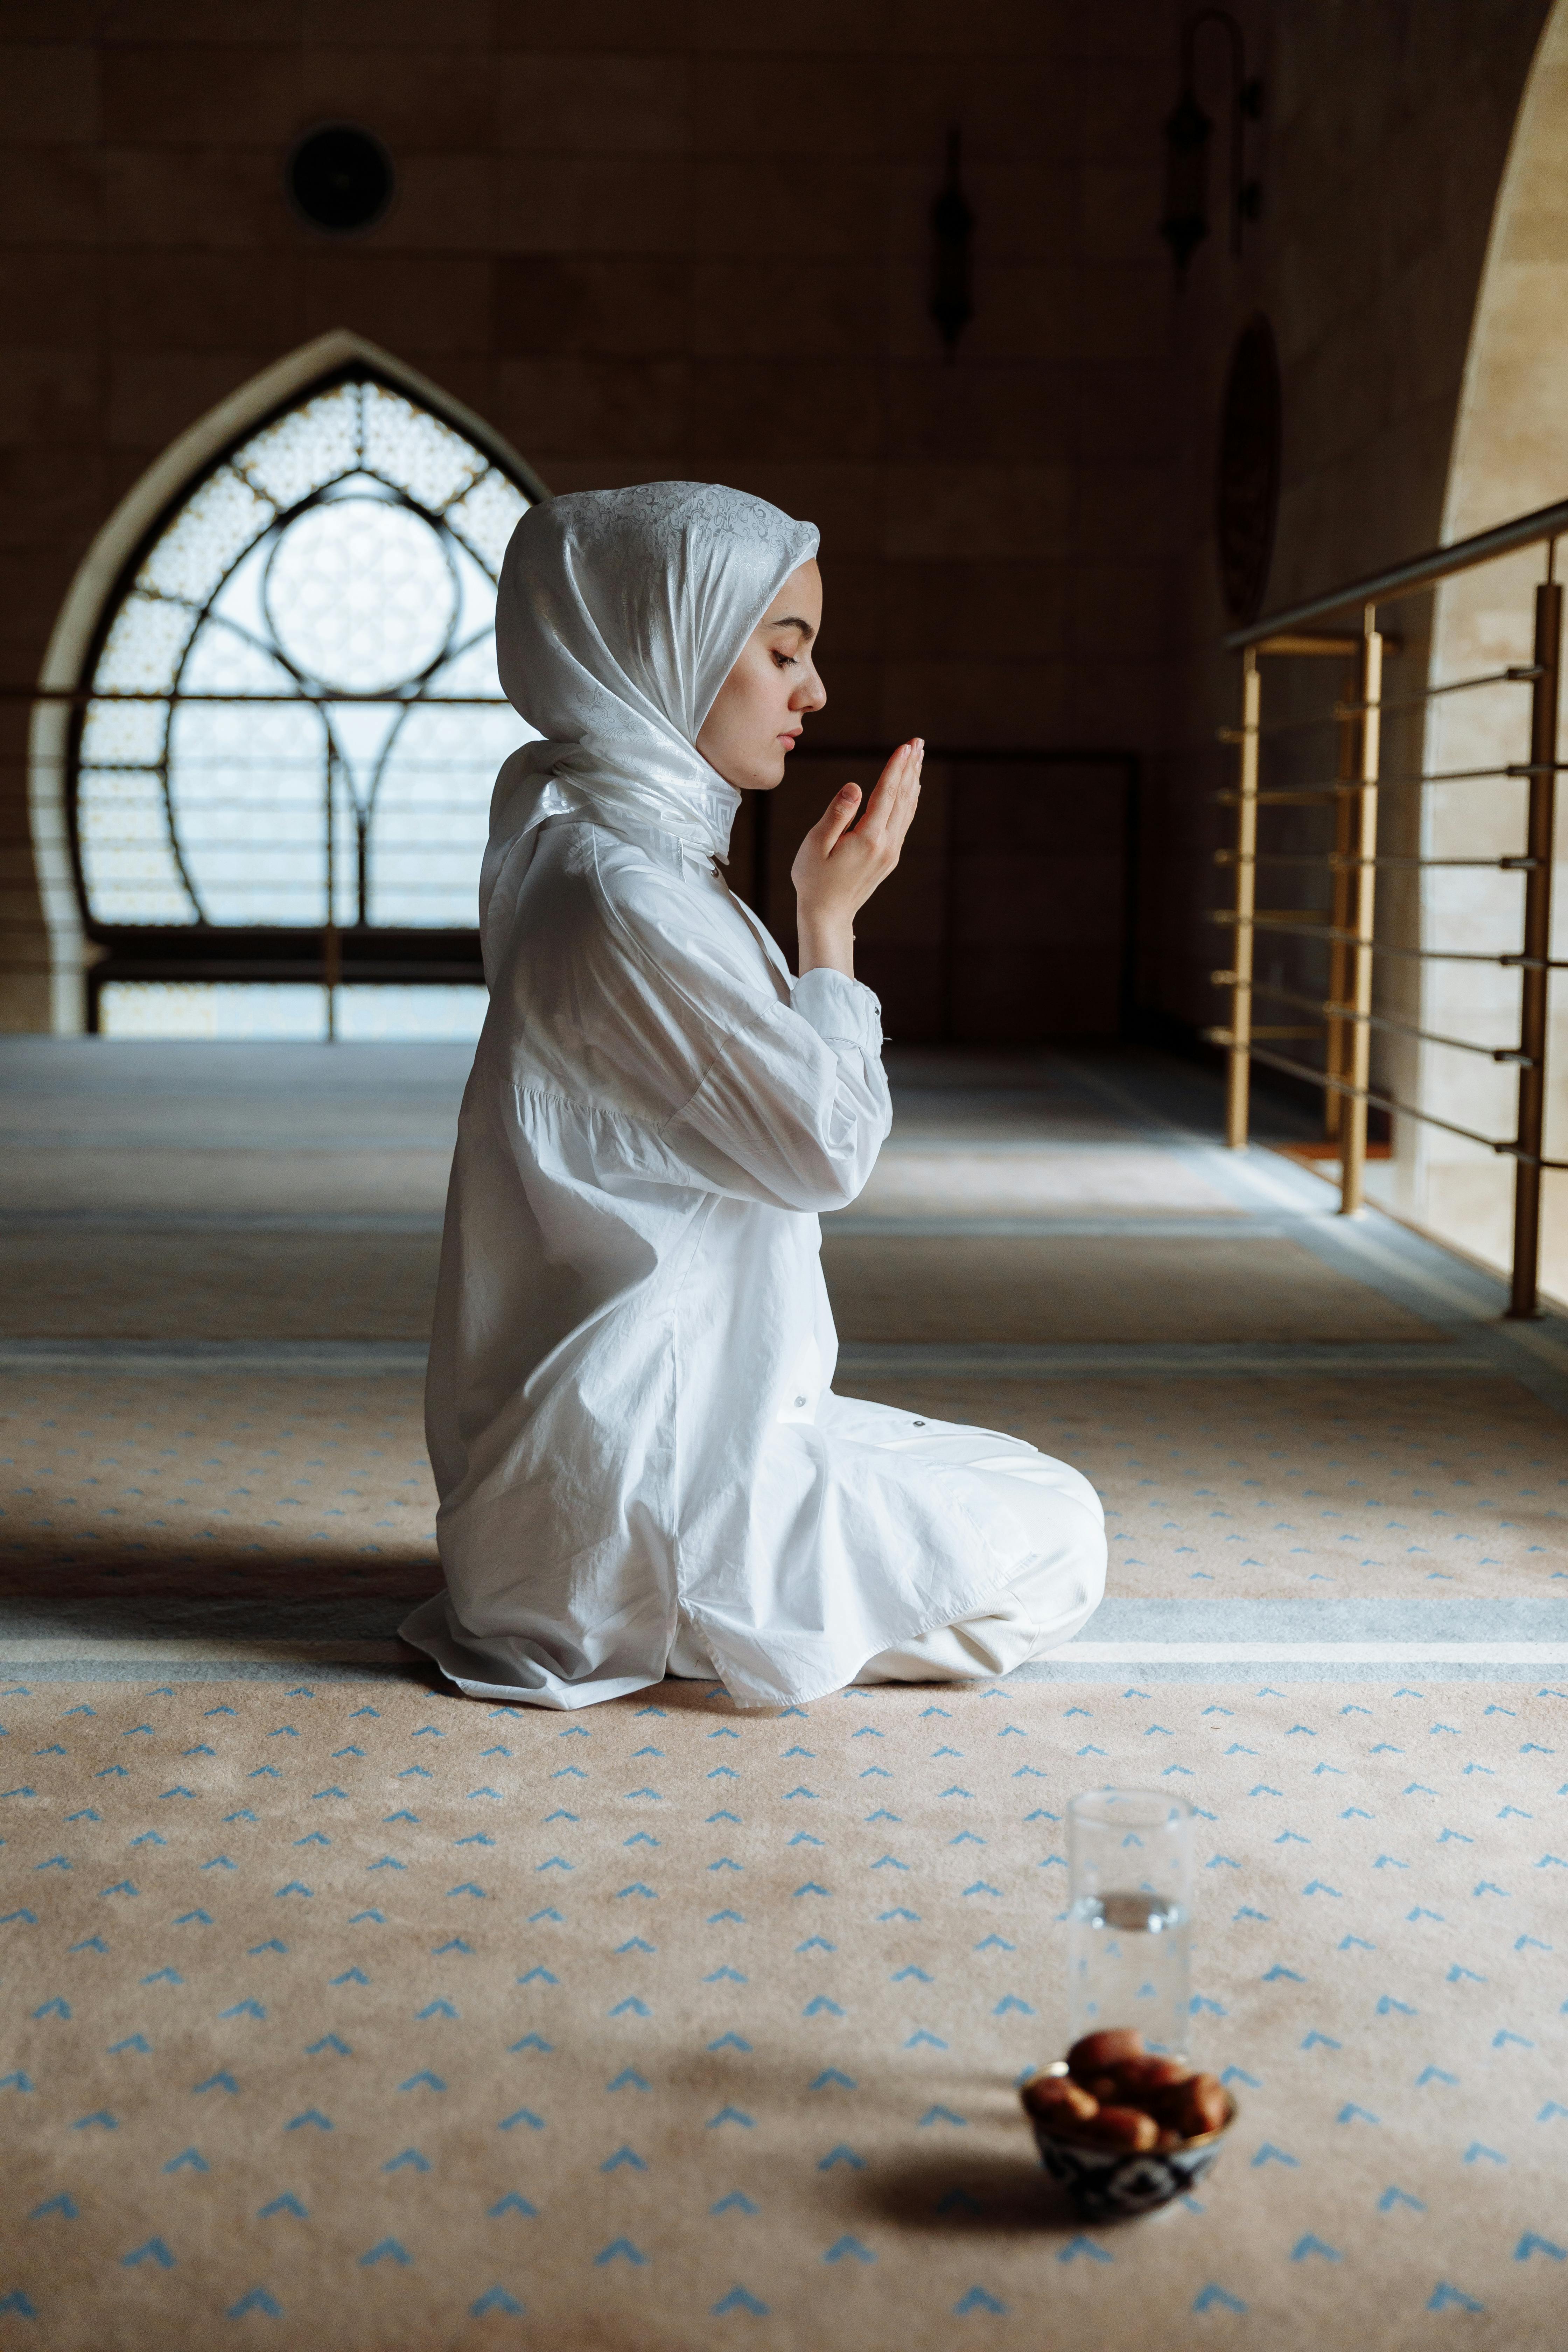 Muslim Woman Praying Photos, Download The BEST Free Muslim Woman